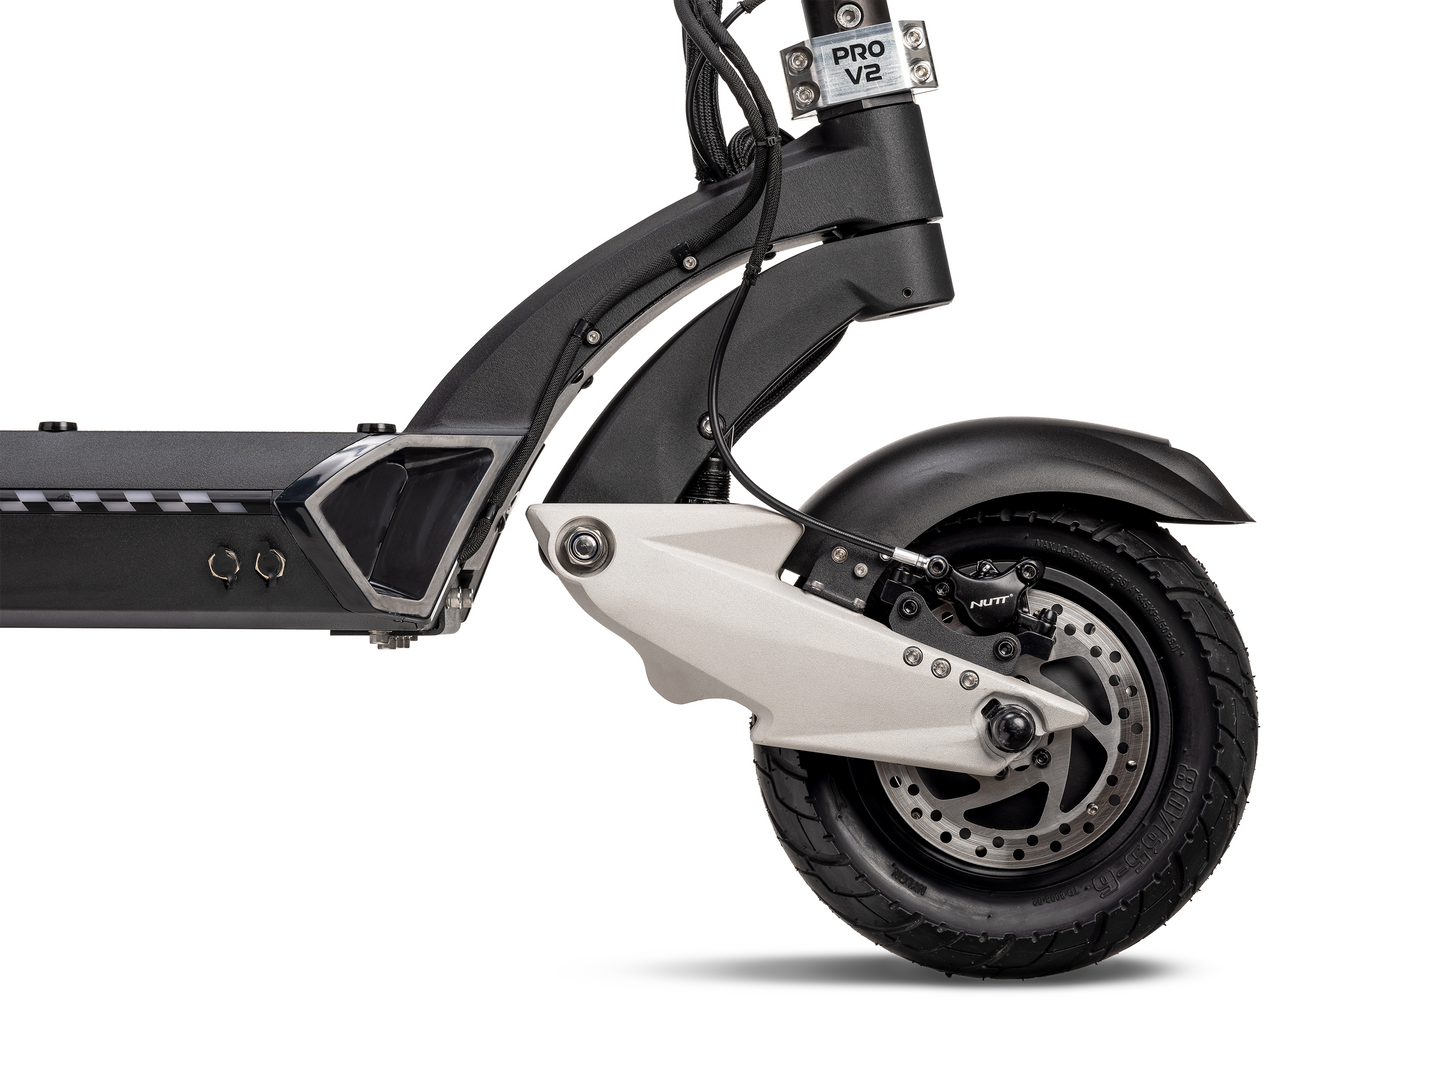 Evolv Pro-R V2 Electric Scooter